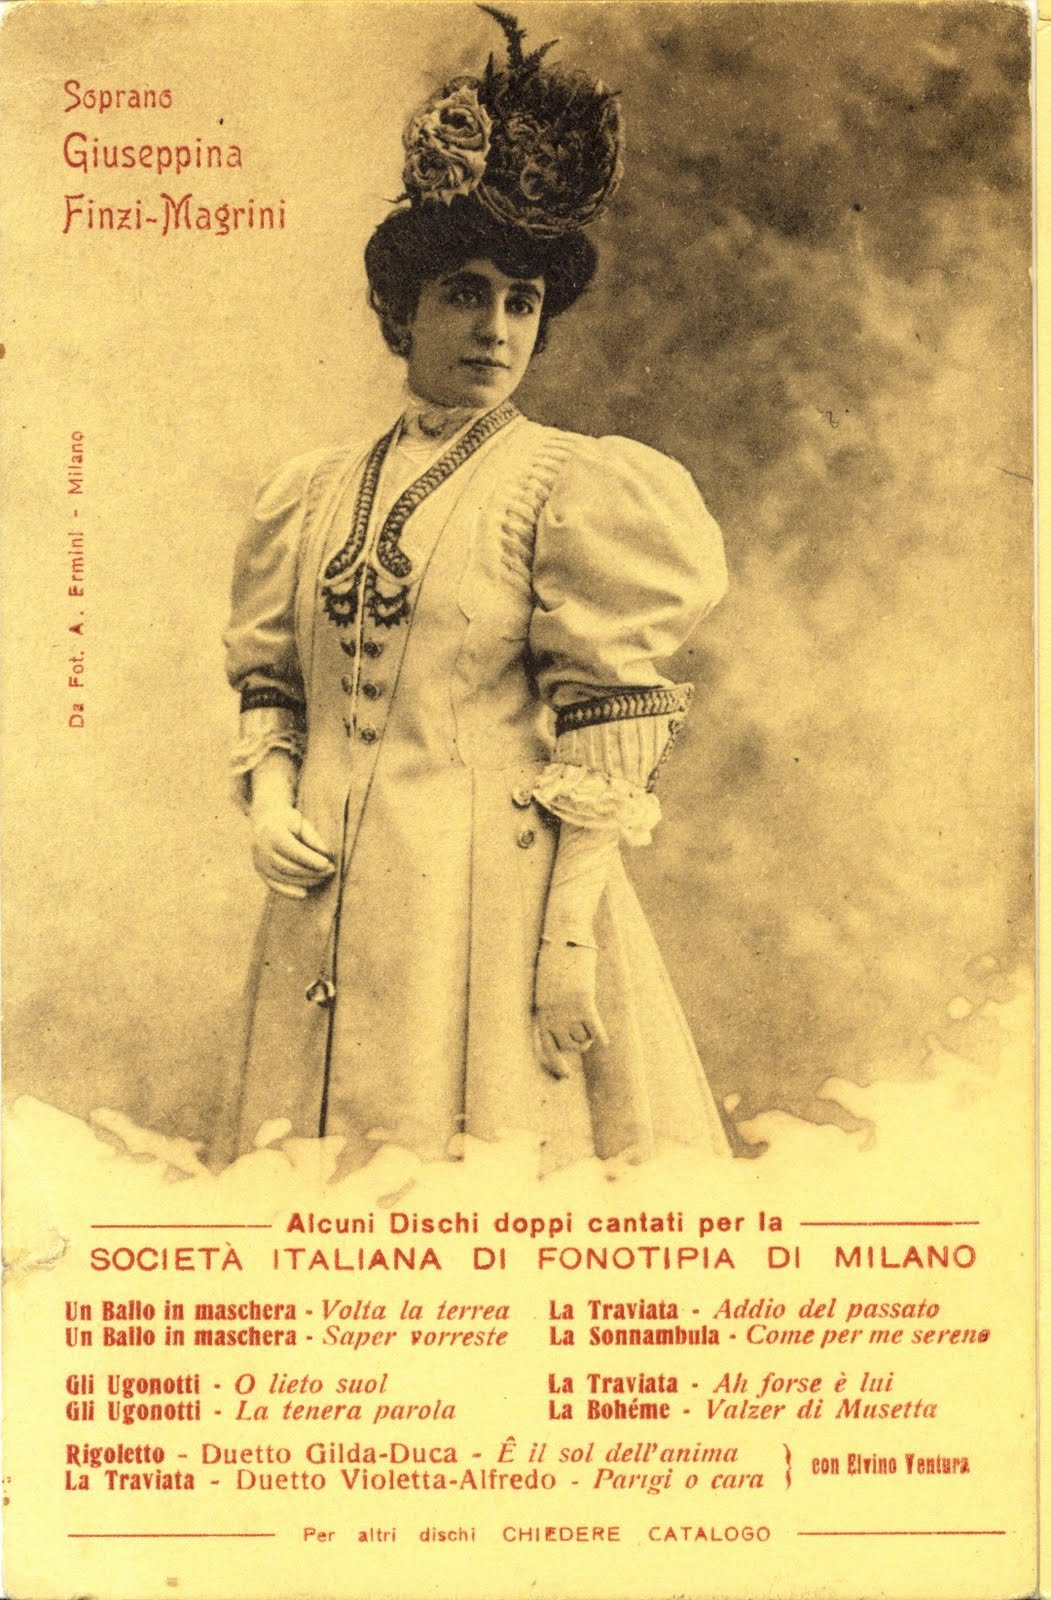 Giuseppina Finzi-Magrini . Operatic sopranos